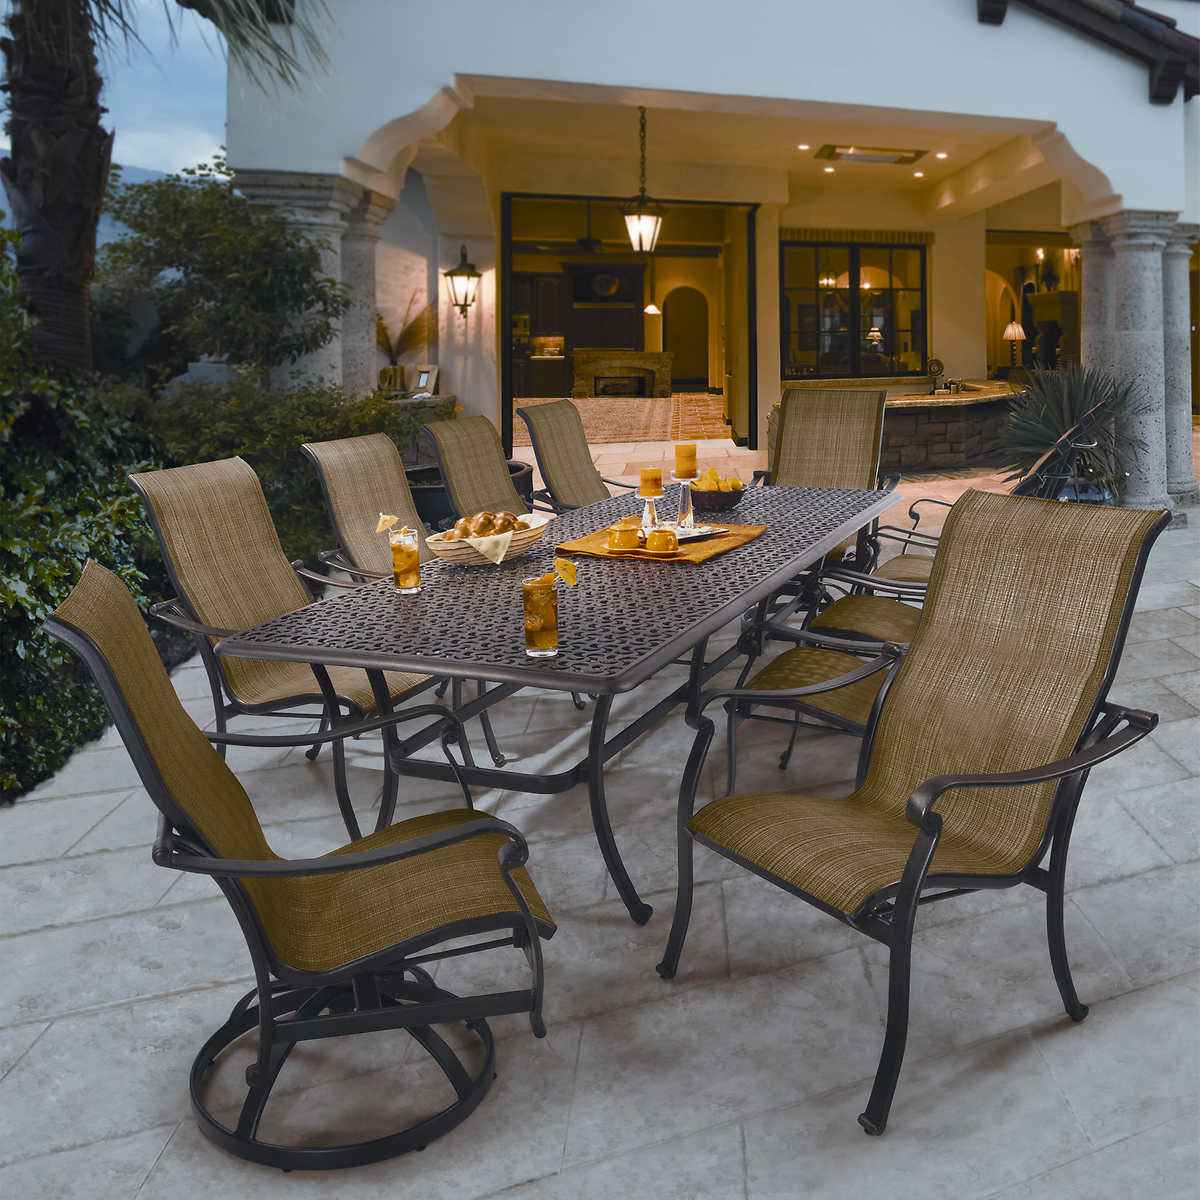 Art Van Outdoor Furniture Covers Outdoor Designs with regard to dimensions 1200 X 1200